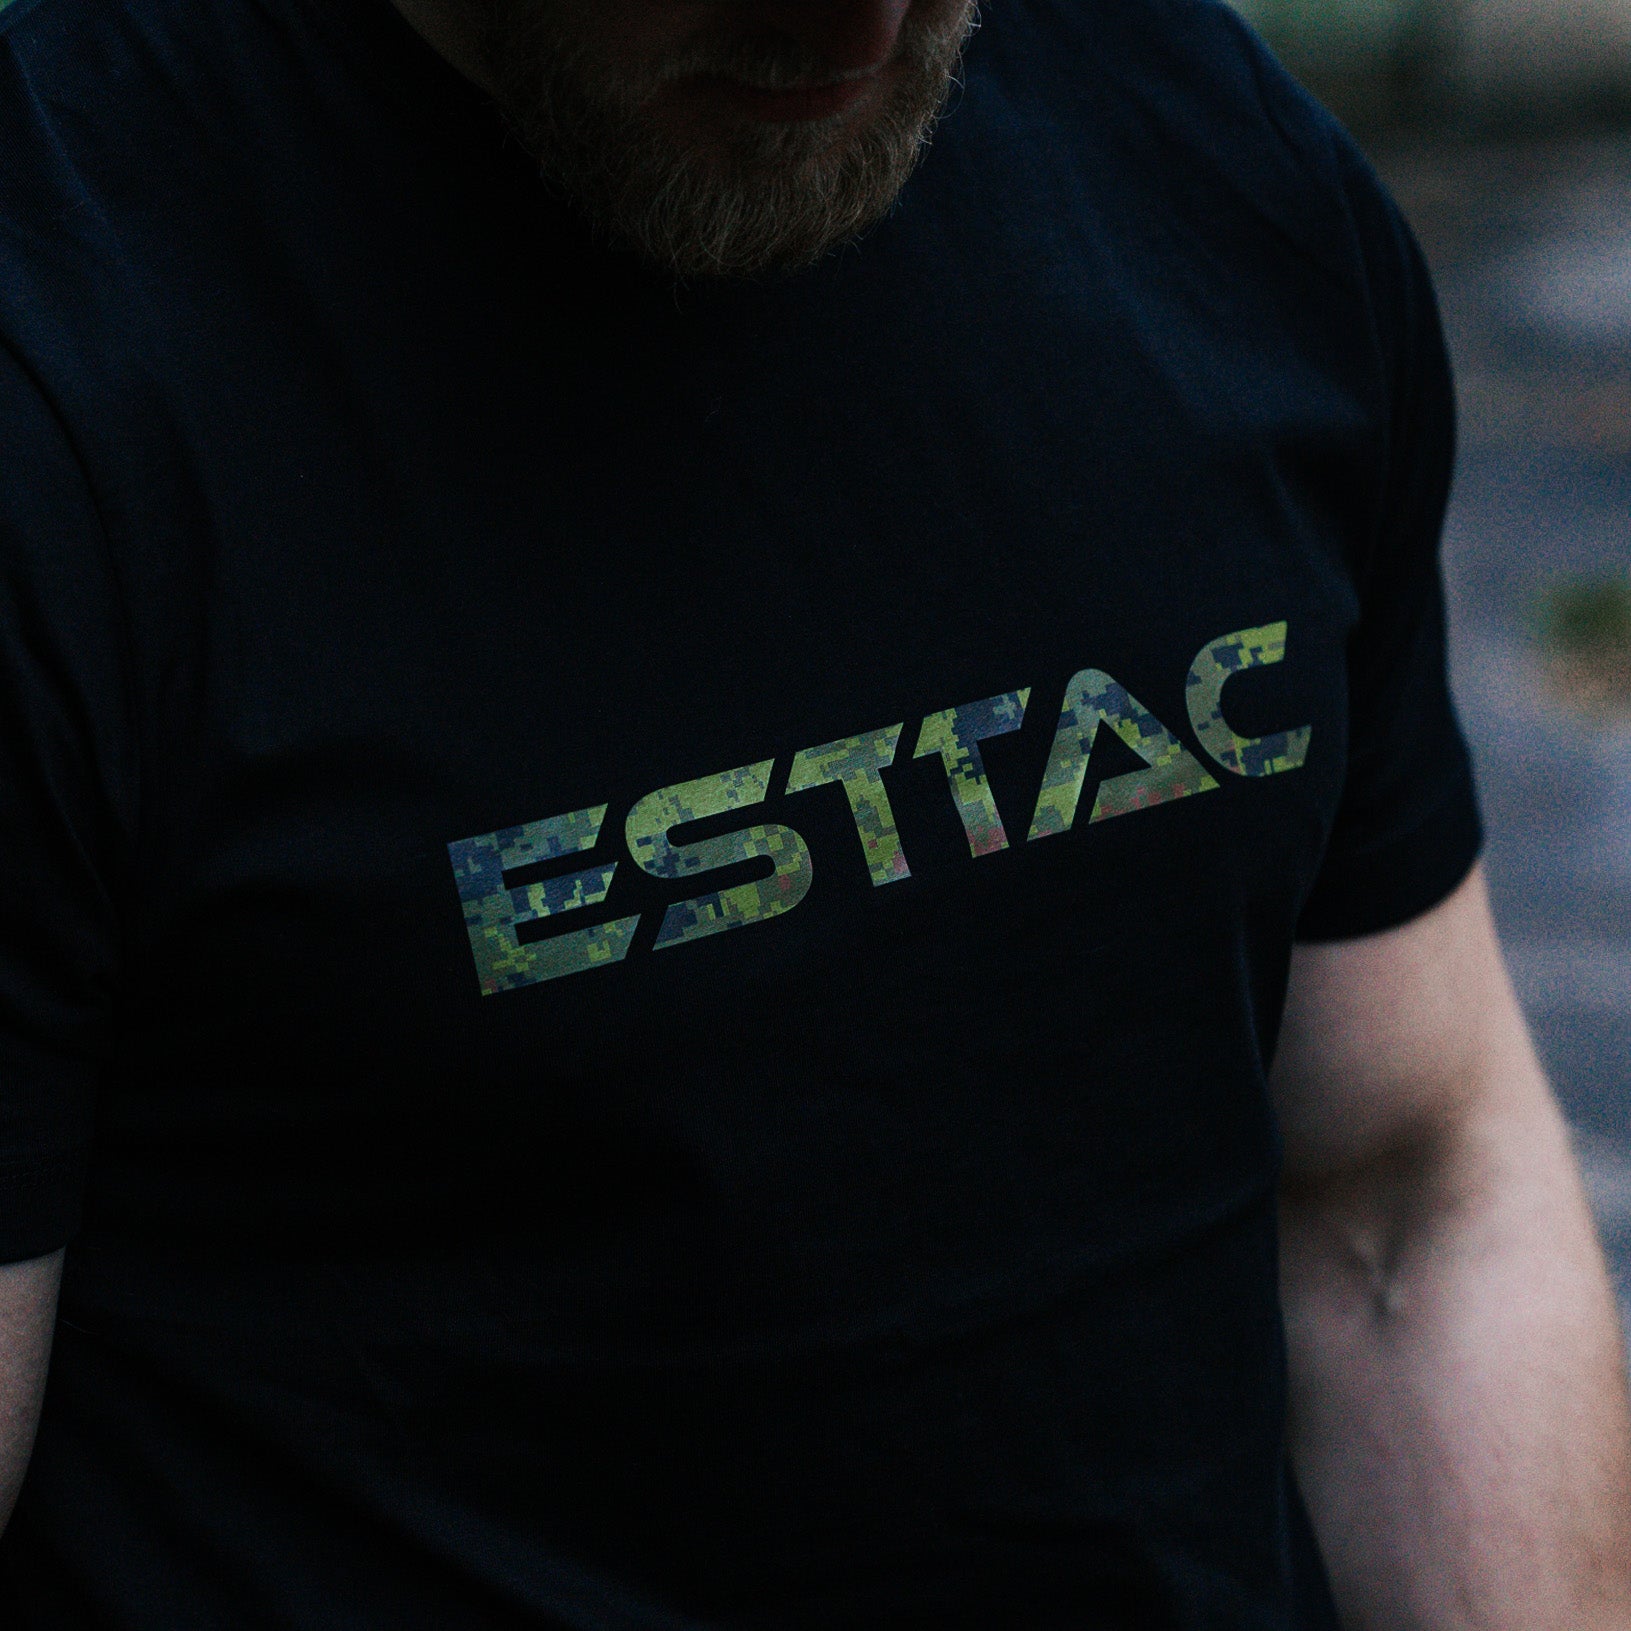 ESTTAC T-shirt